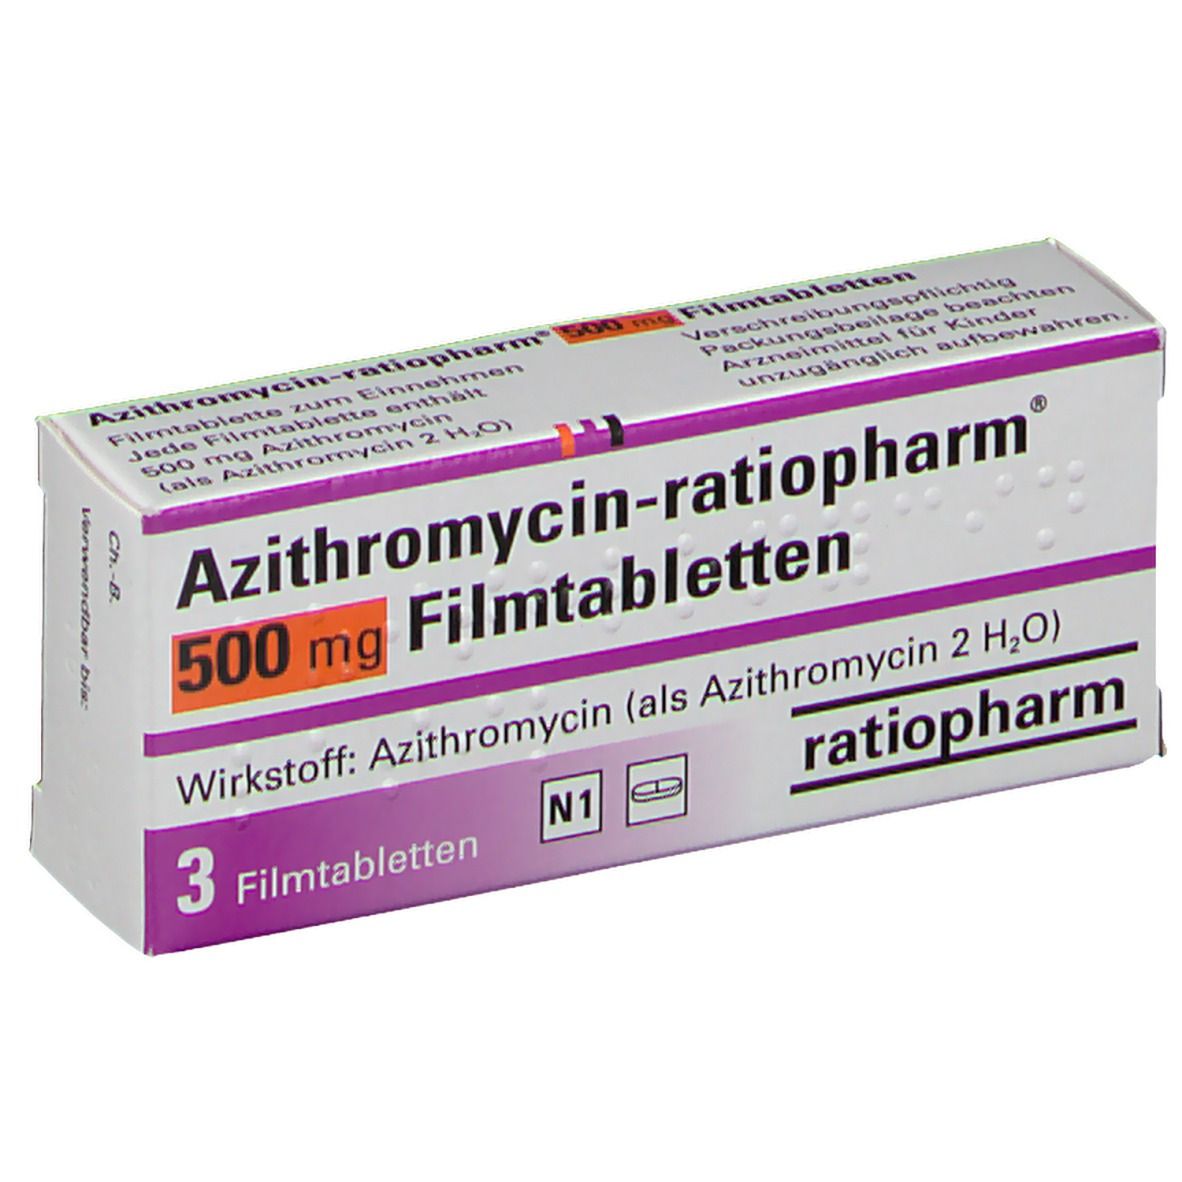 Azithromycin-ratiopharm® 500 mg